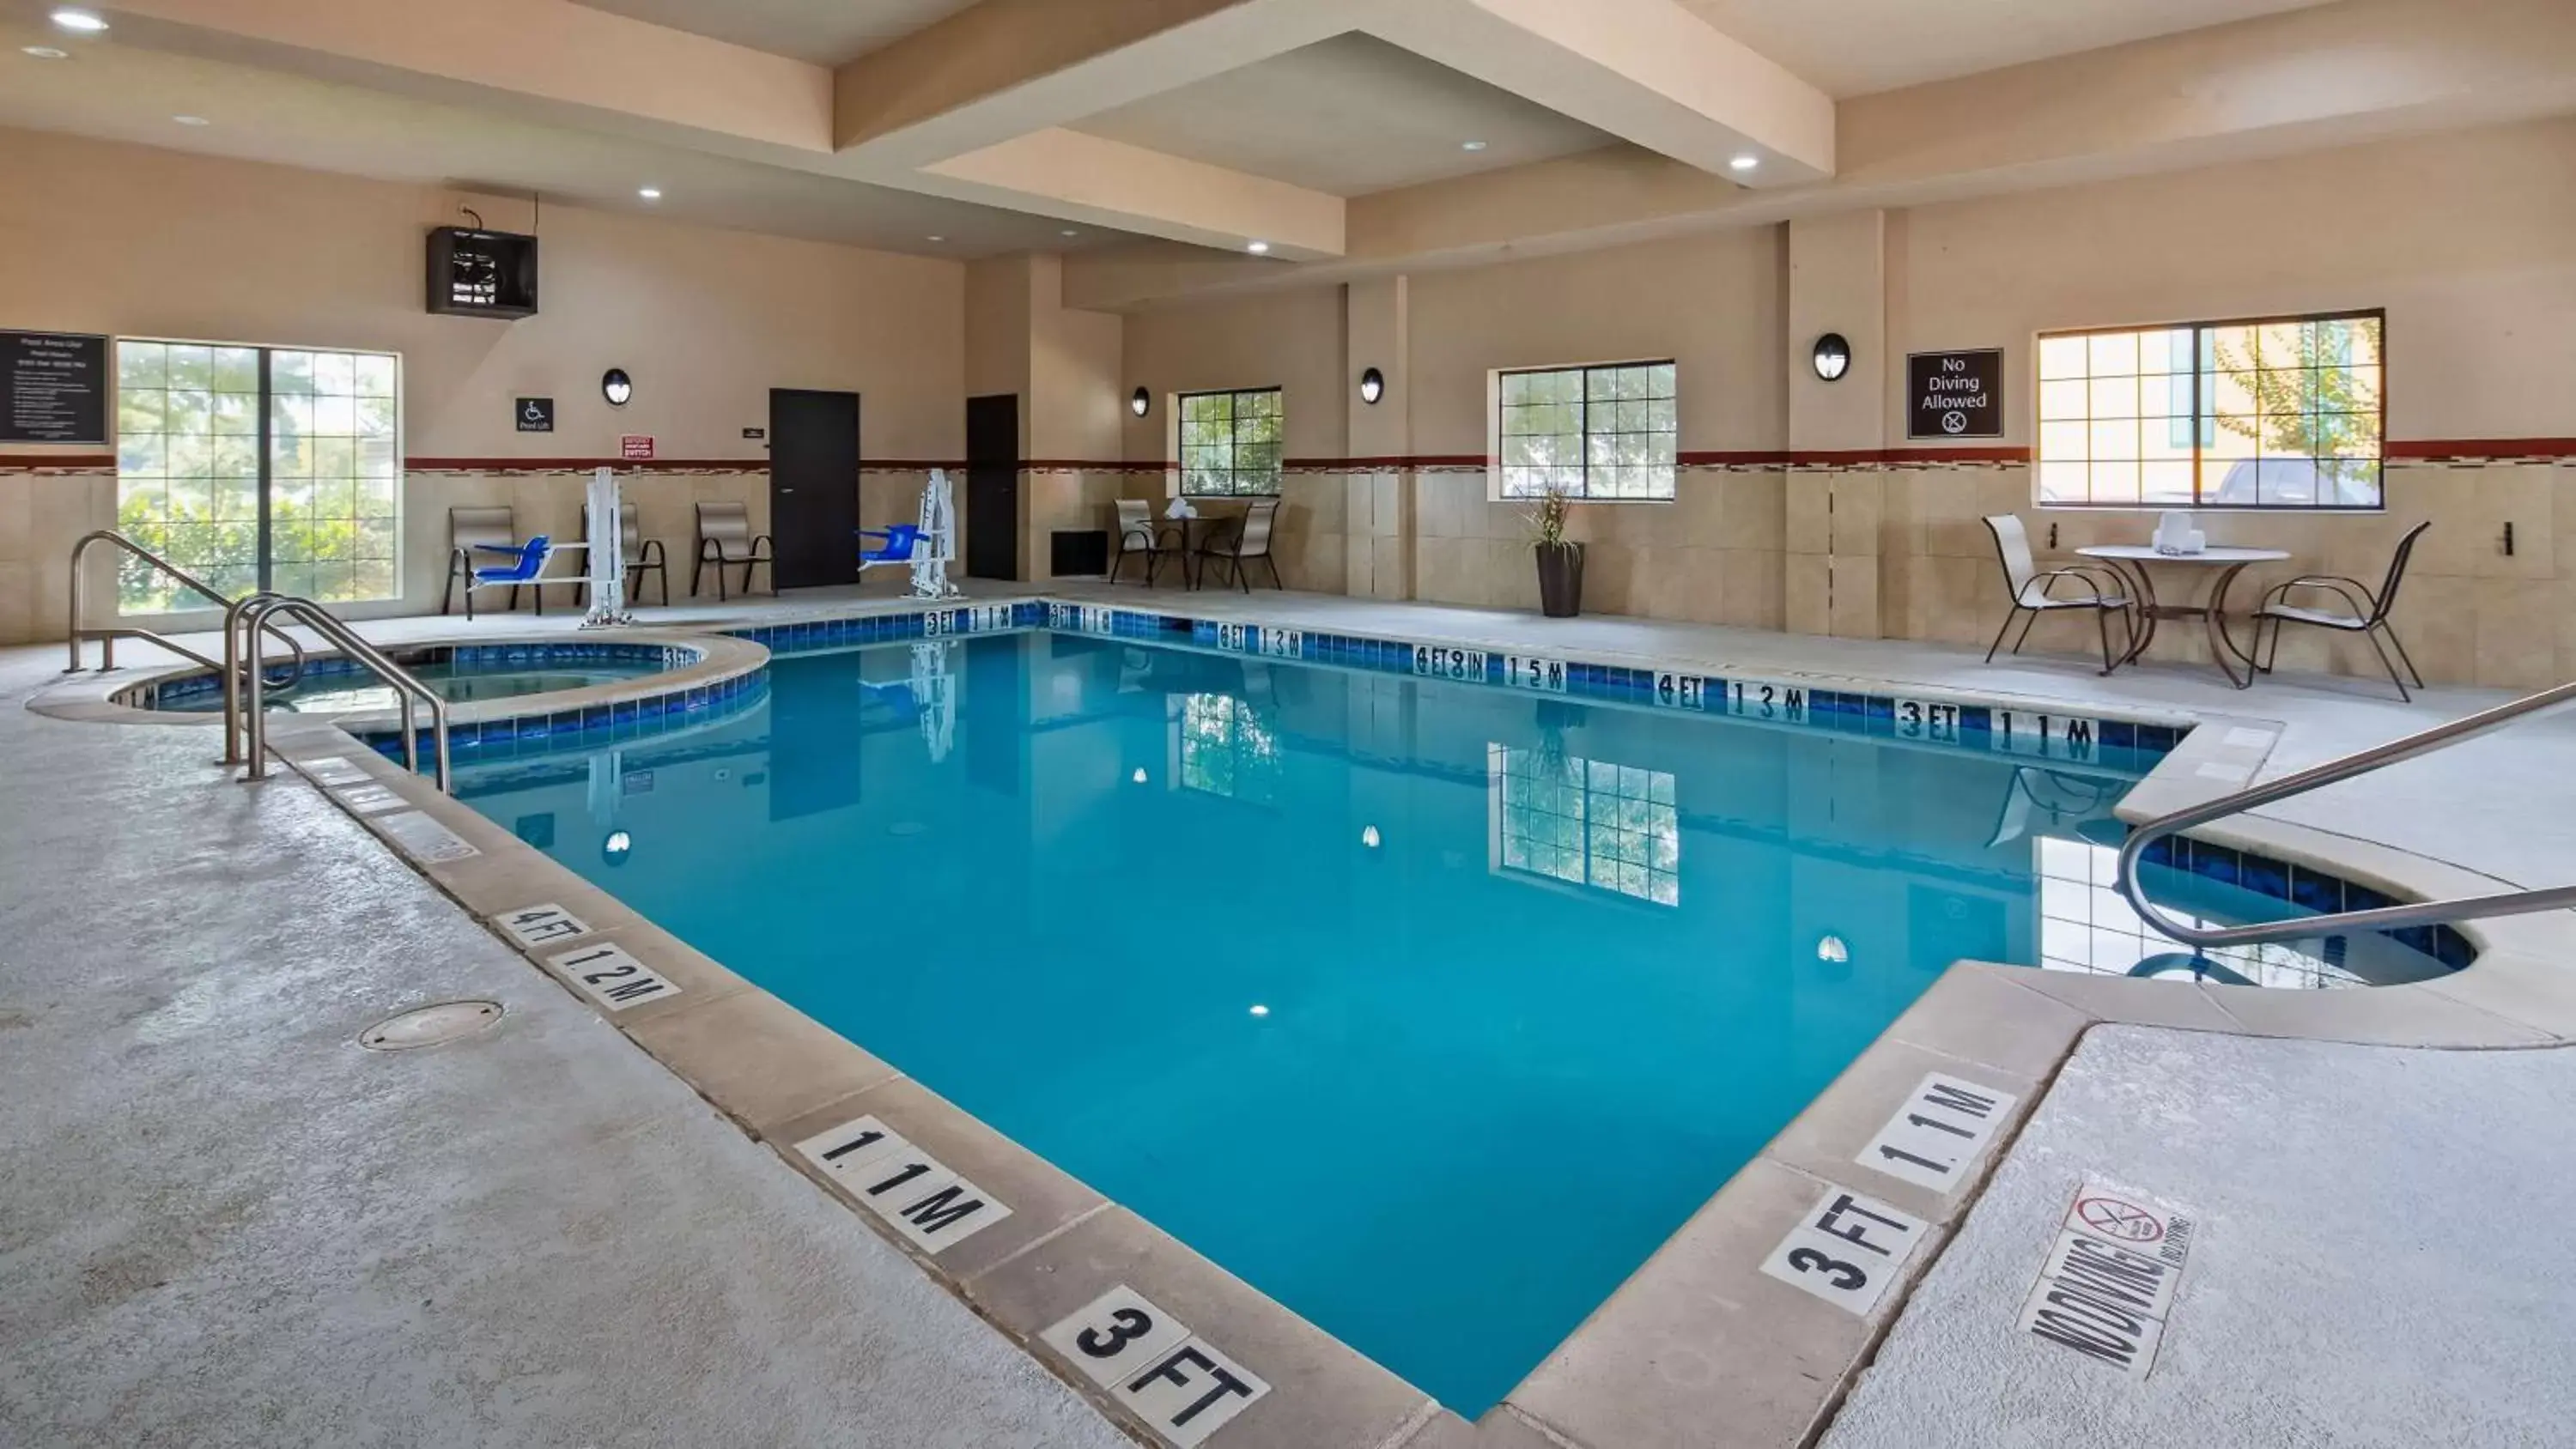 On site, Swimming Pool in Best Western Plus Mansfield Inn and Suites